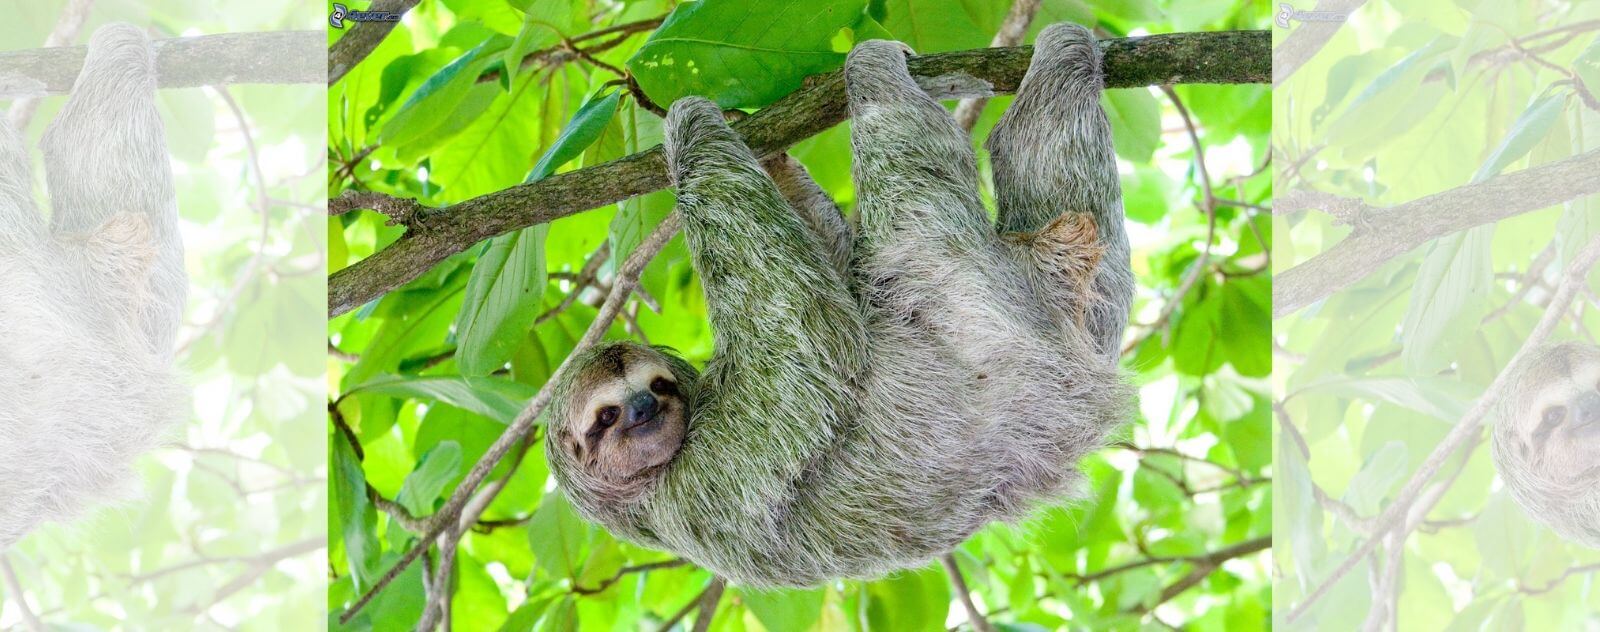 Sloth Upside Down